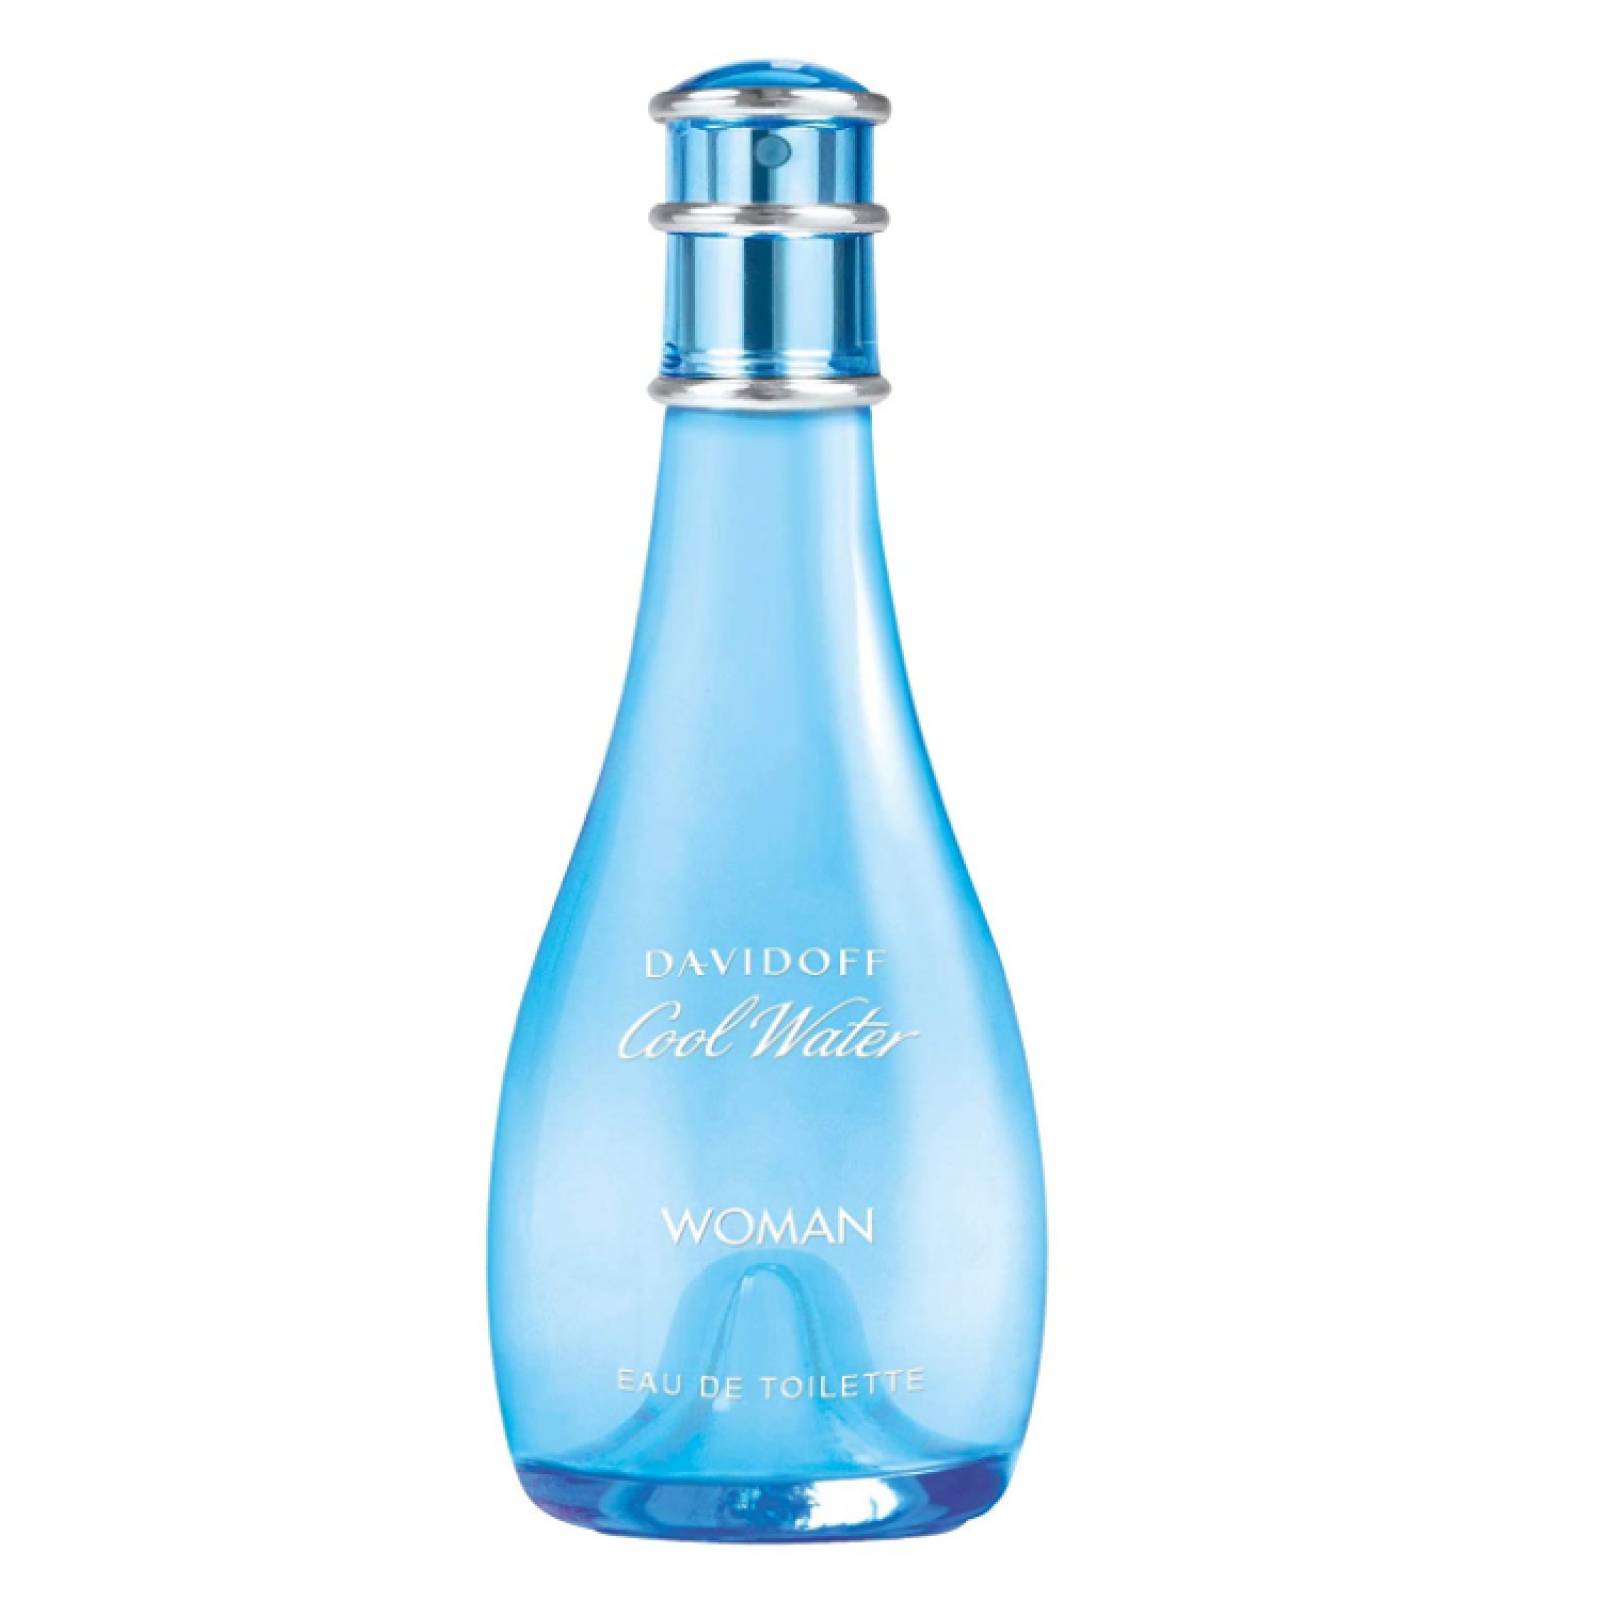 Perfume Cool Water para Dama de Davidoff edt 100ML